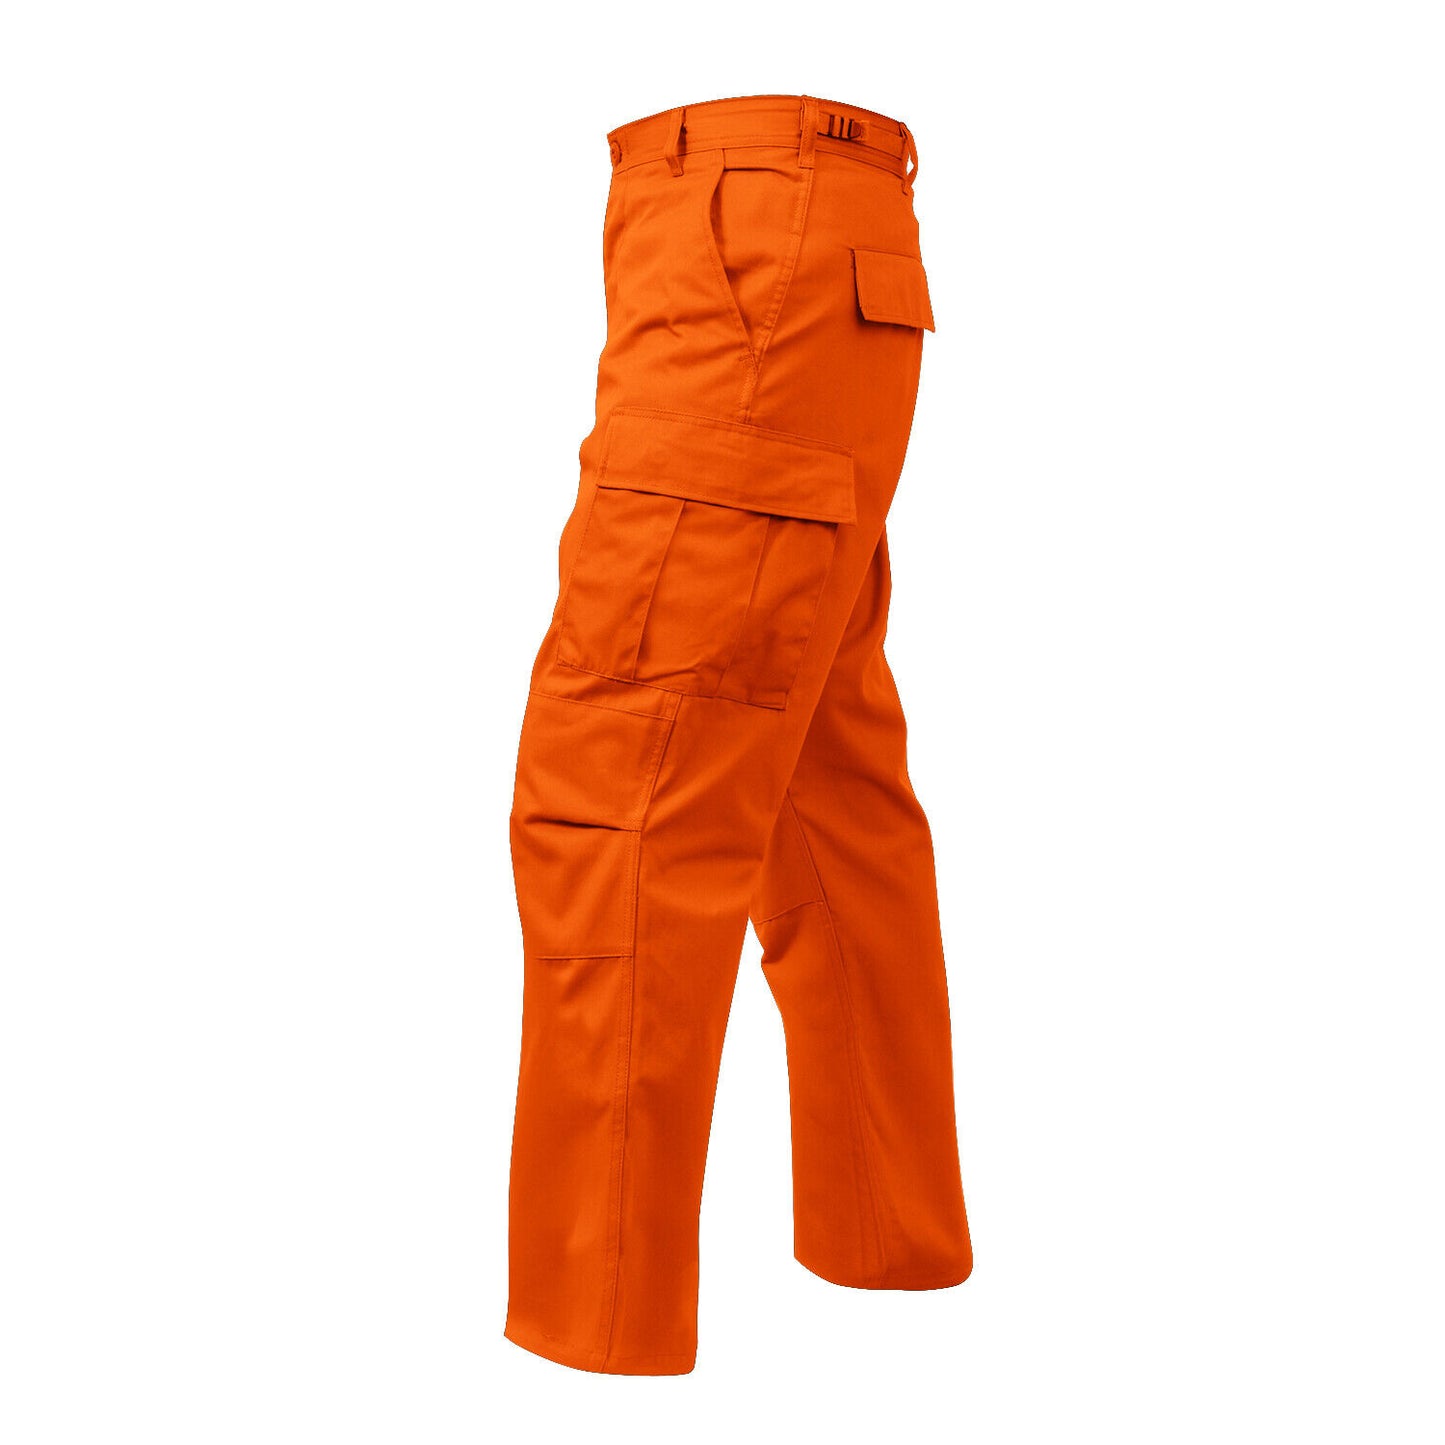 Blaze Orange 6 Pocket Tactical BDU Pant